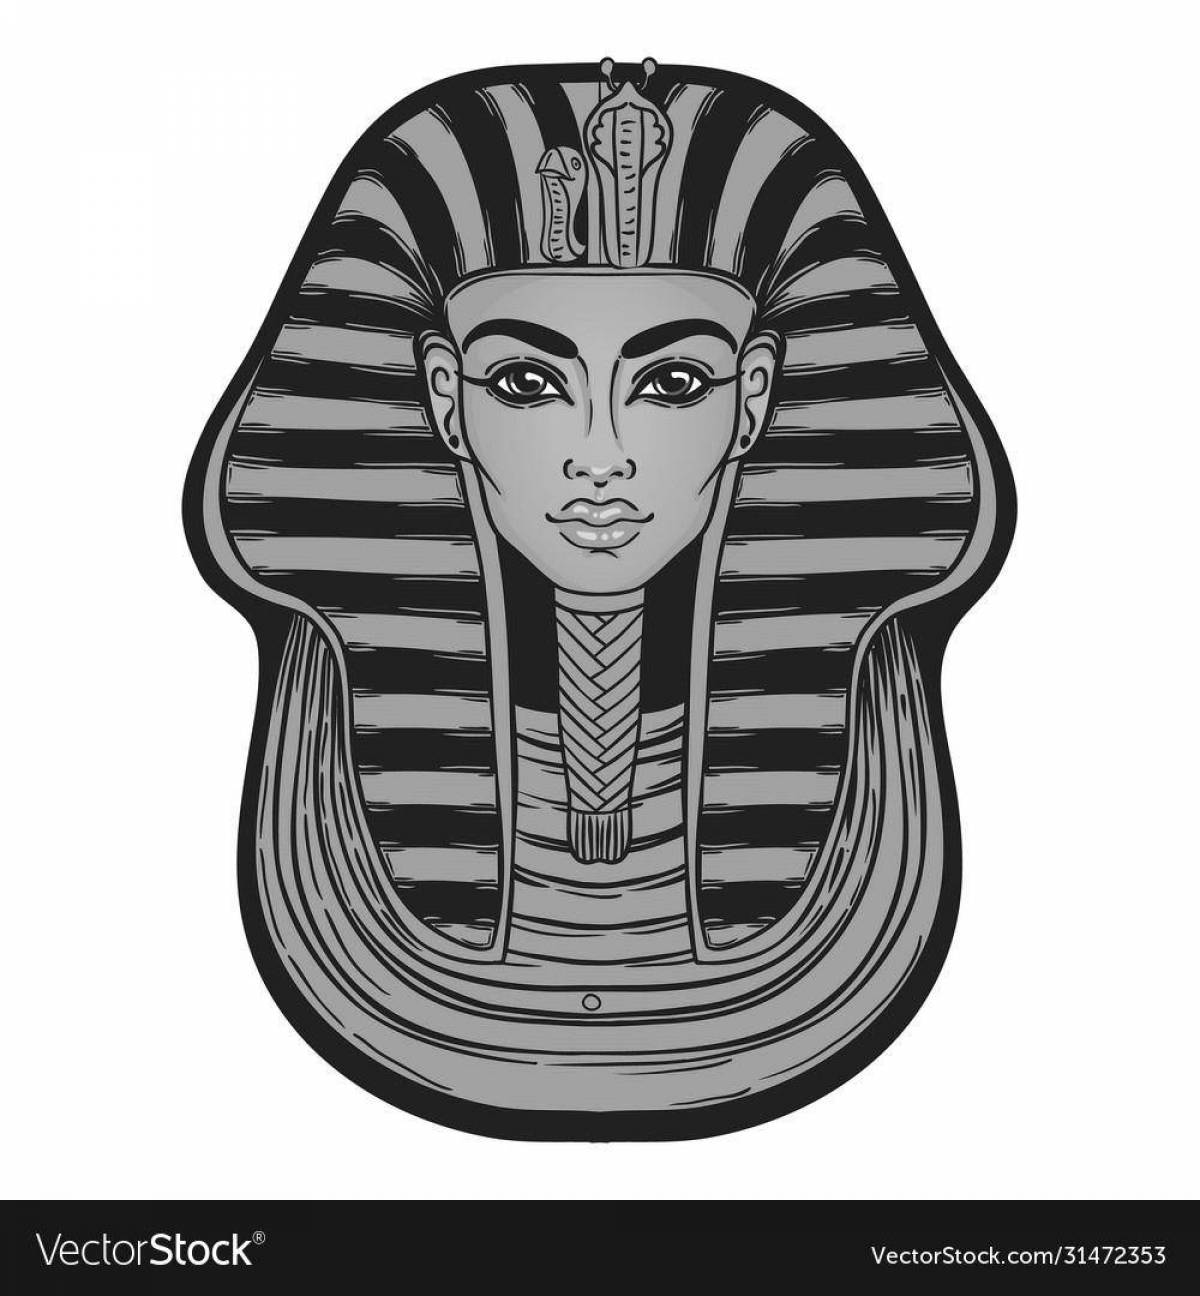 Mask of the pharaoh tutankhamen from class 5 #4